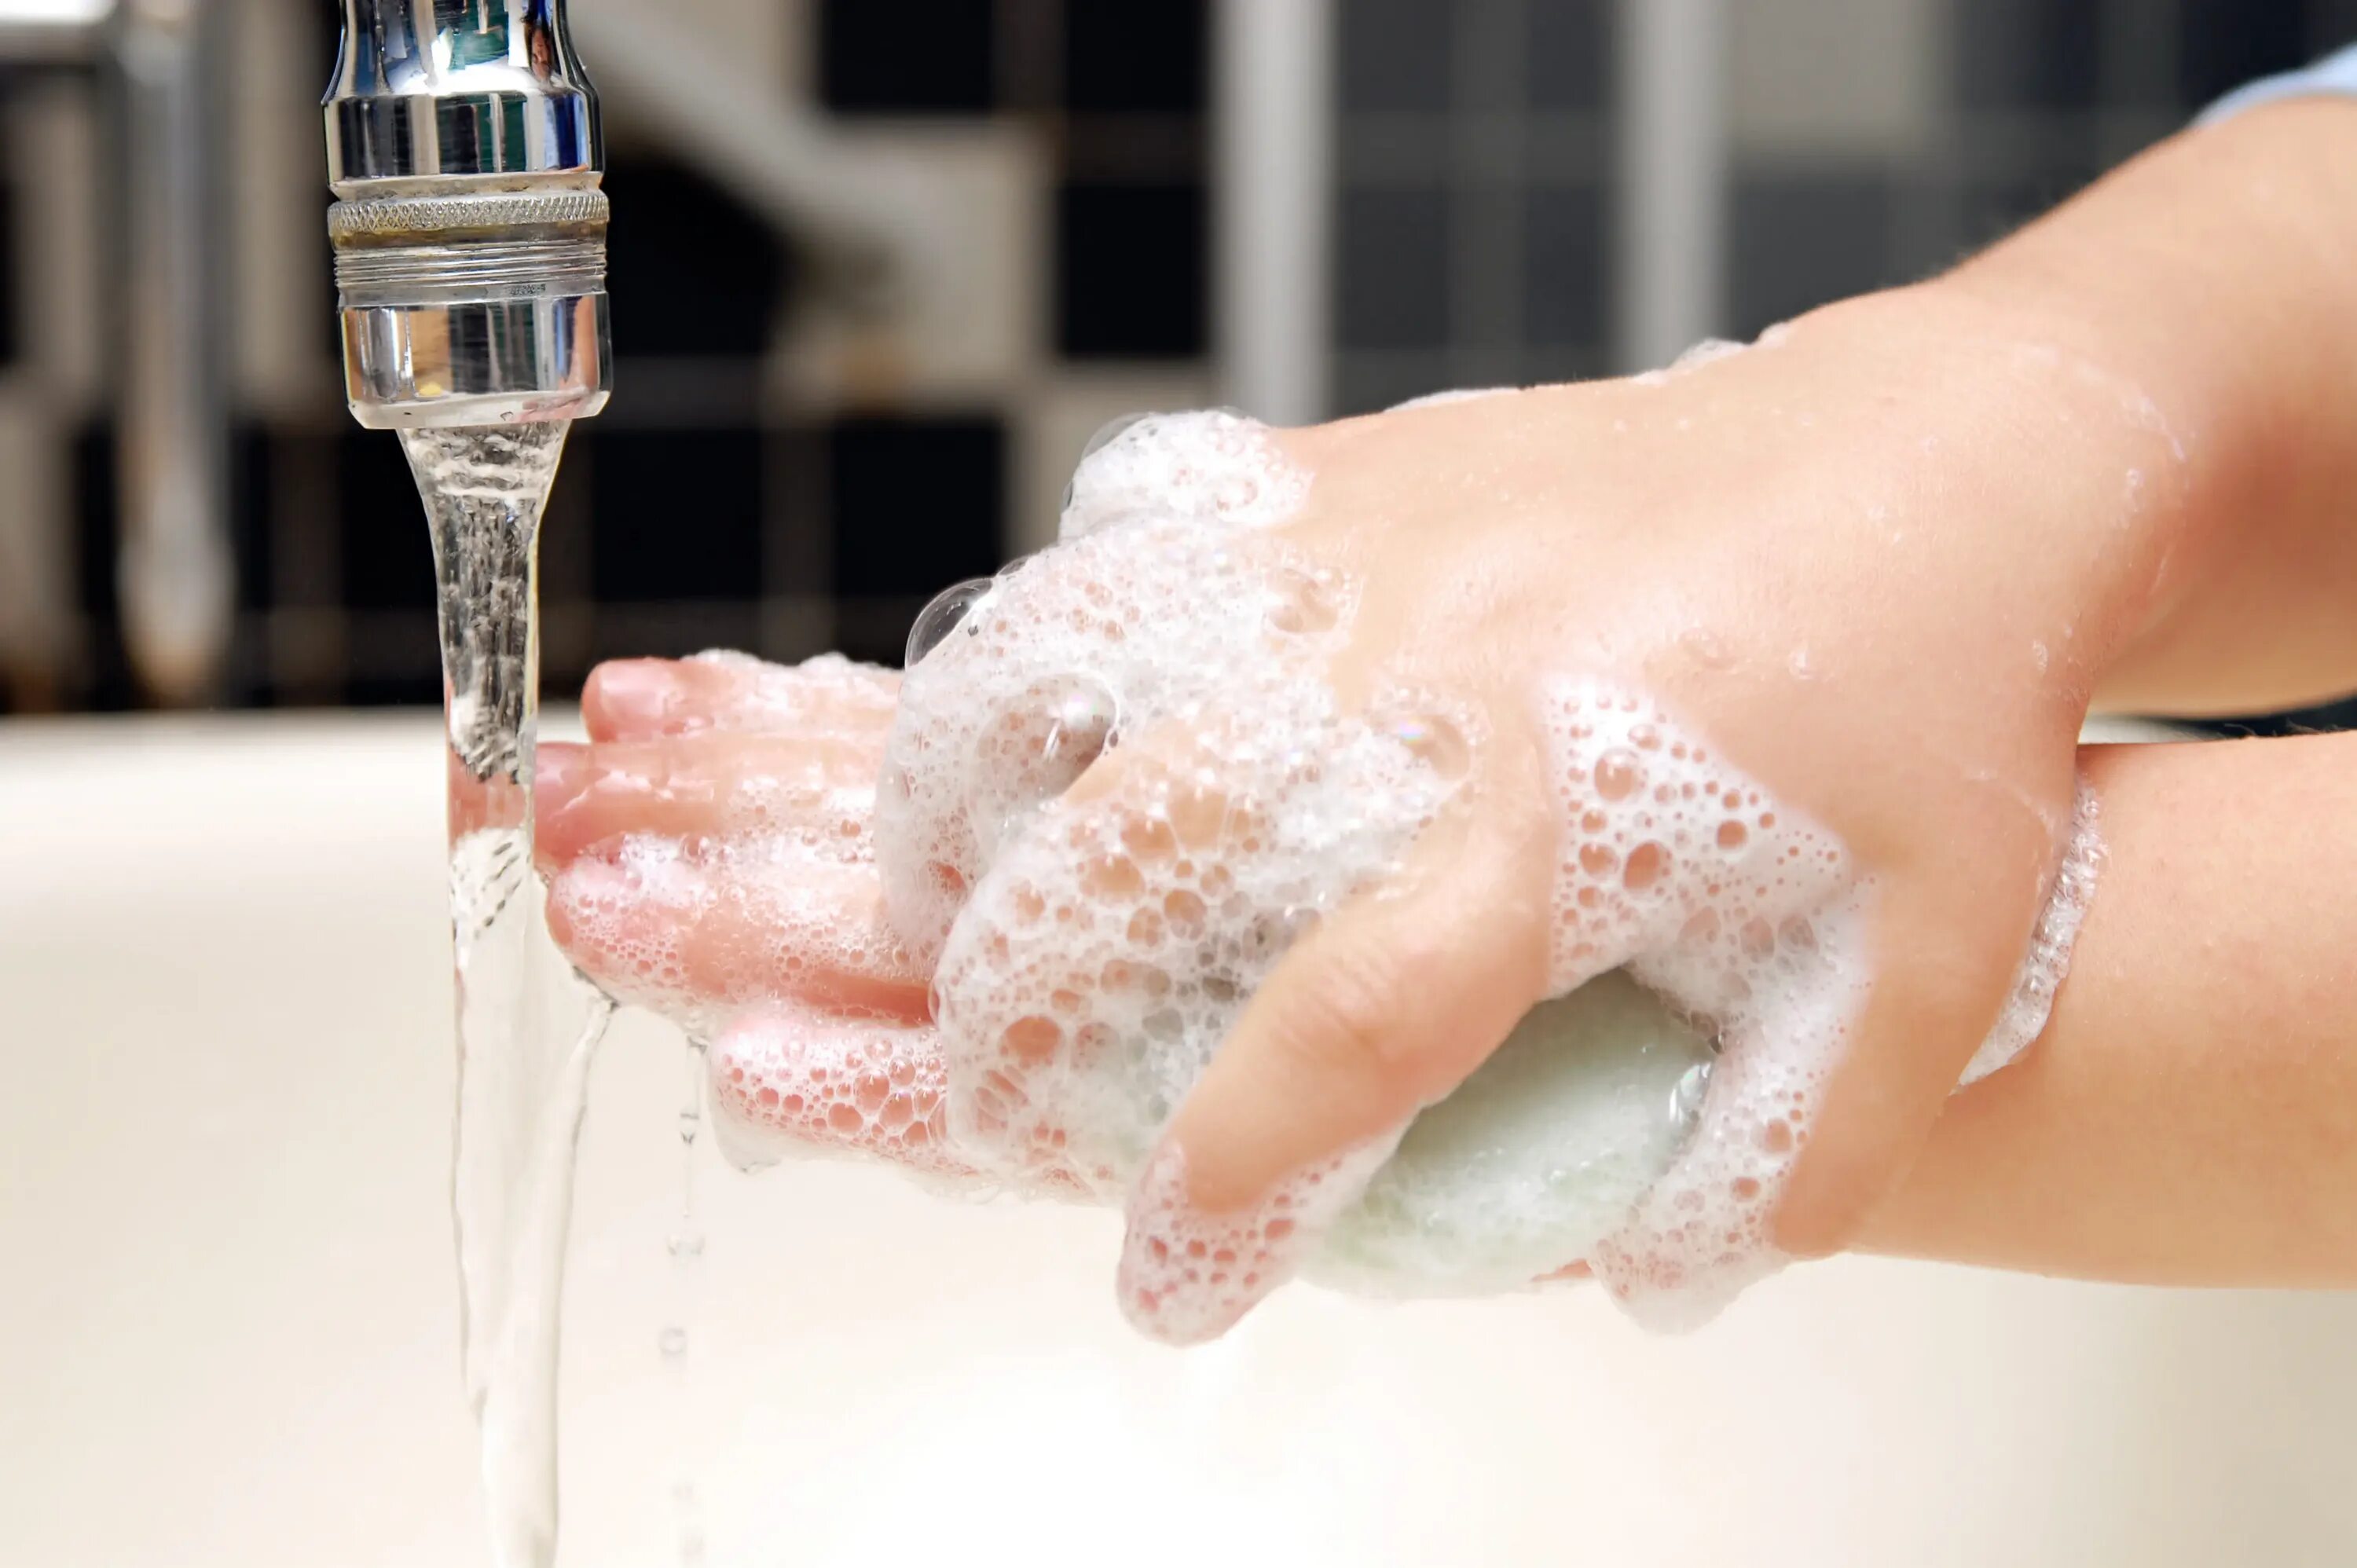 We wash hands. Мытье рук. Мыло для рук. Гигиена рук. Мытье рук с мылом.